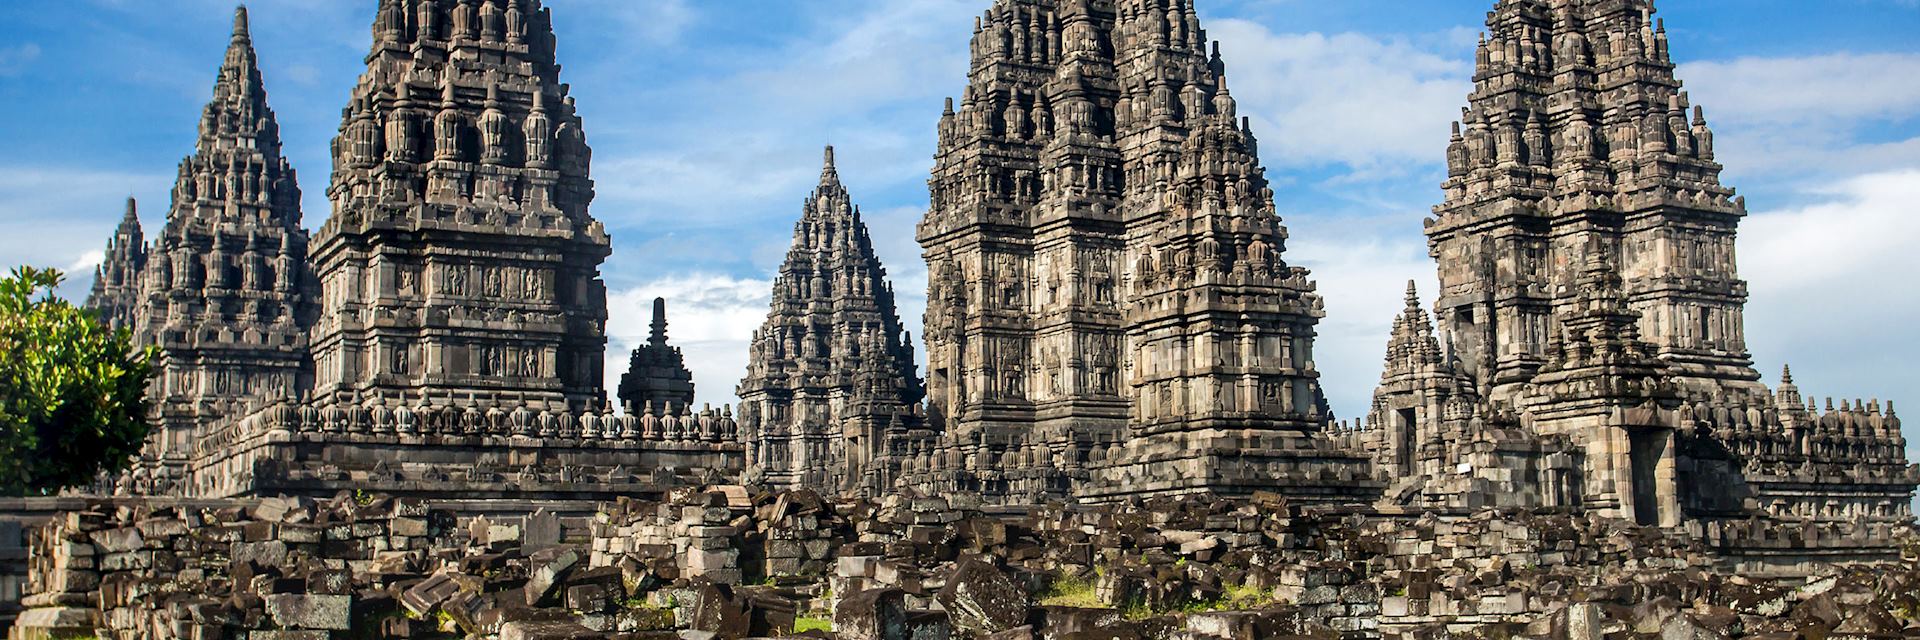 Prambanan Temple near Yogyakarta